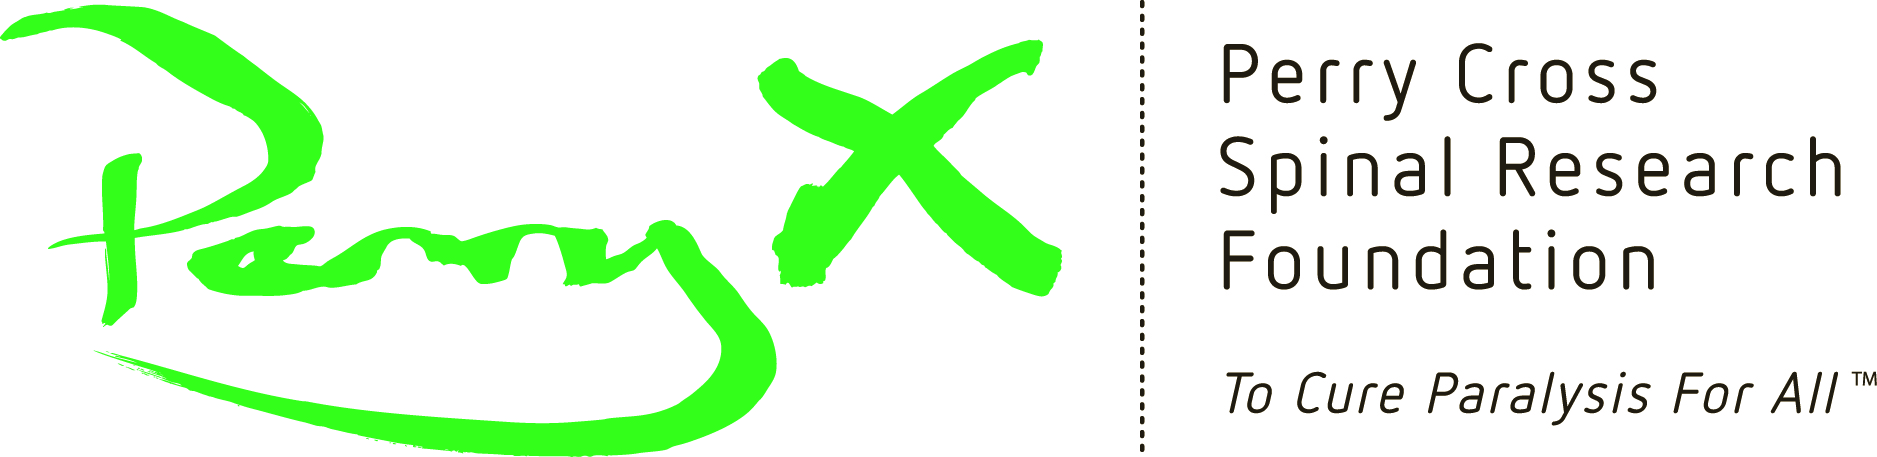 Copy of perry-cross-logo-landscape-pms